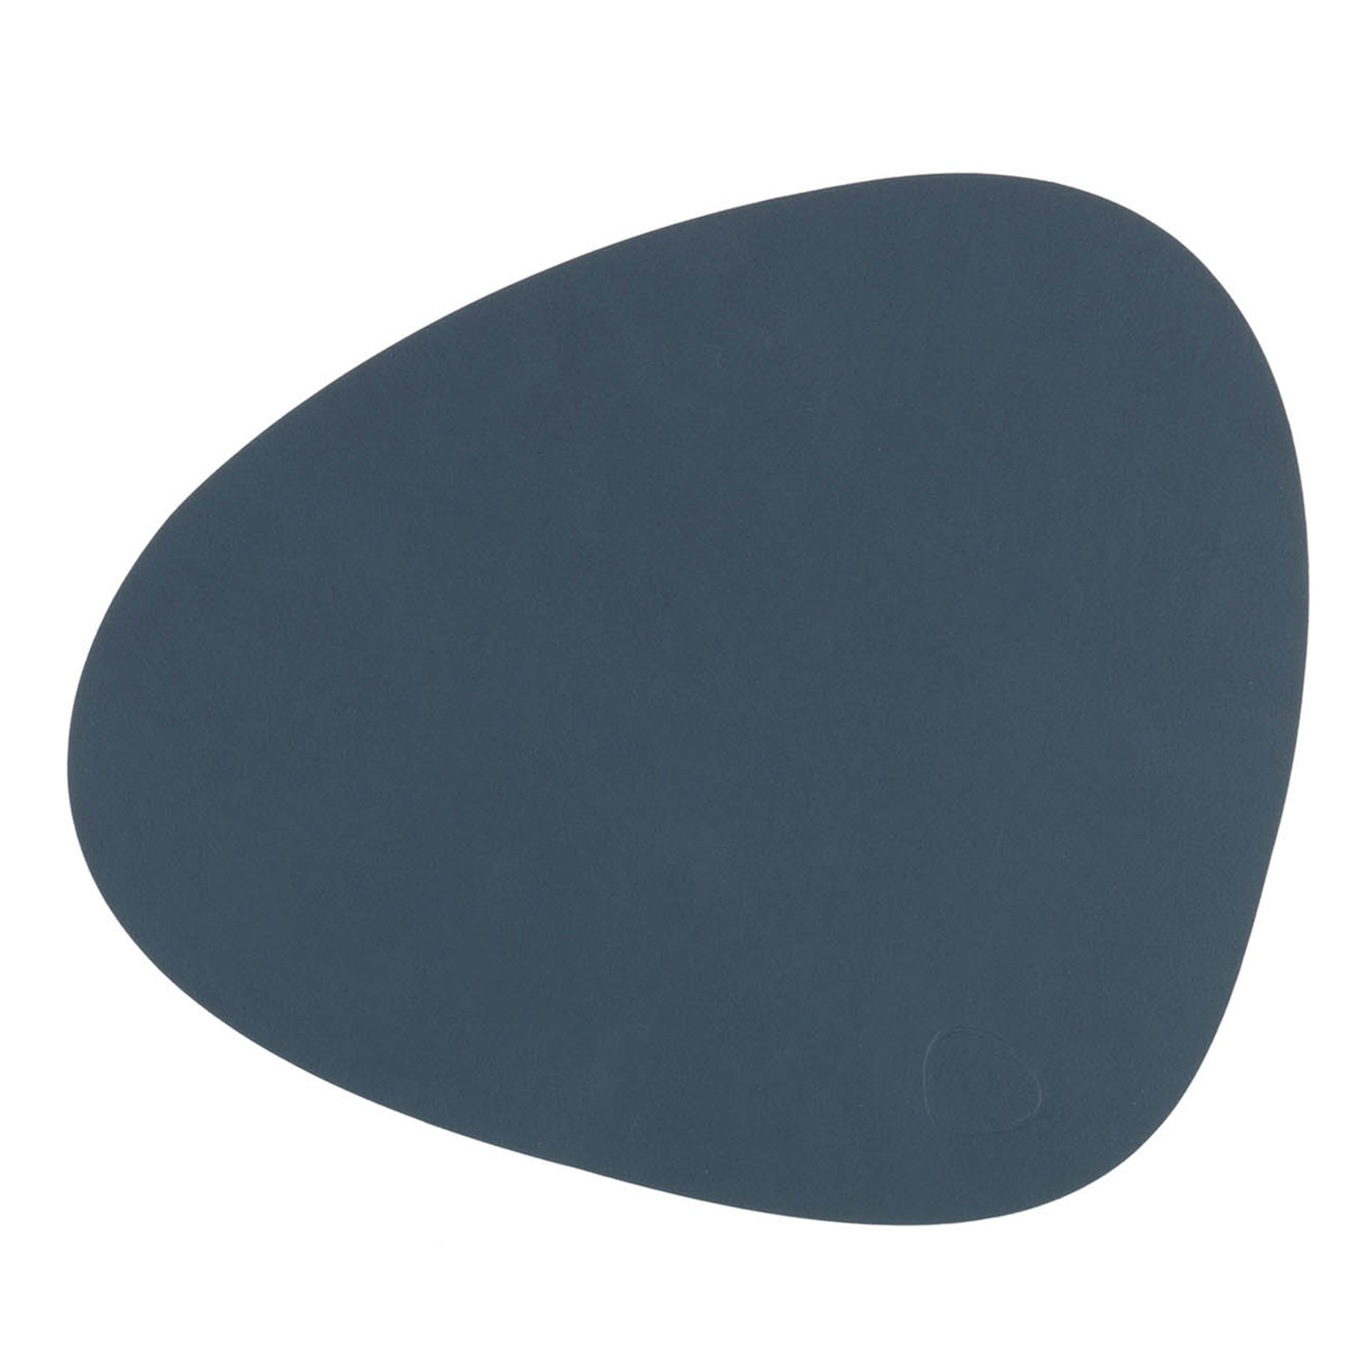 Curve Placemat Nupo 24x28 cm, Dark Blue